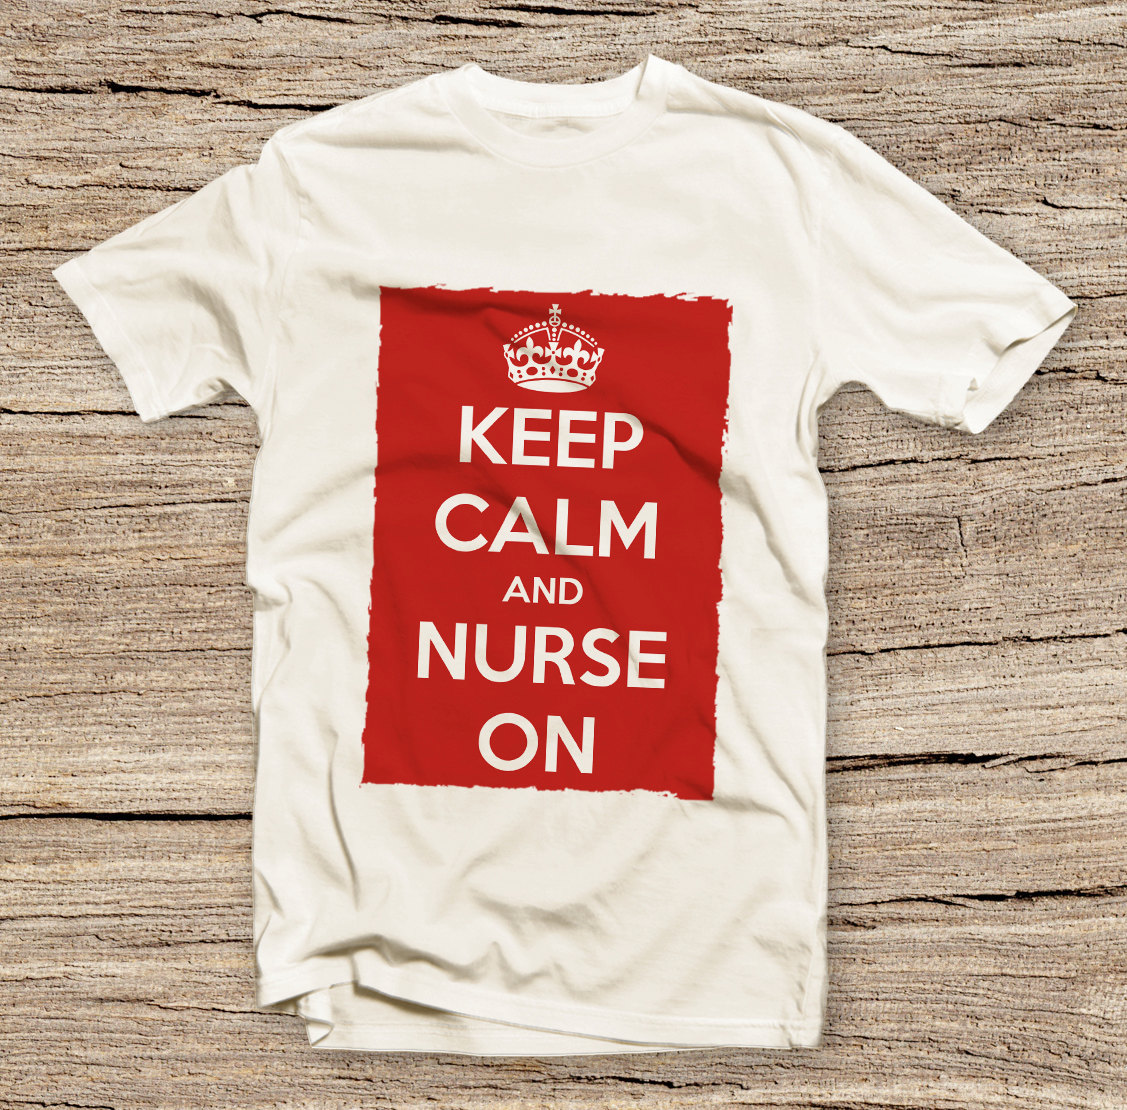 Pts-021 Keep Calm And Nurse On, Fashion Style Printed T-shirt